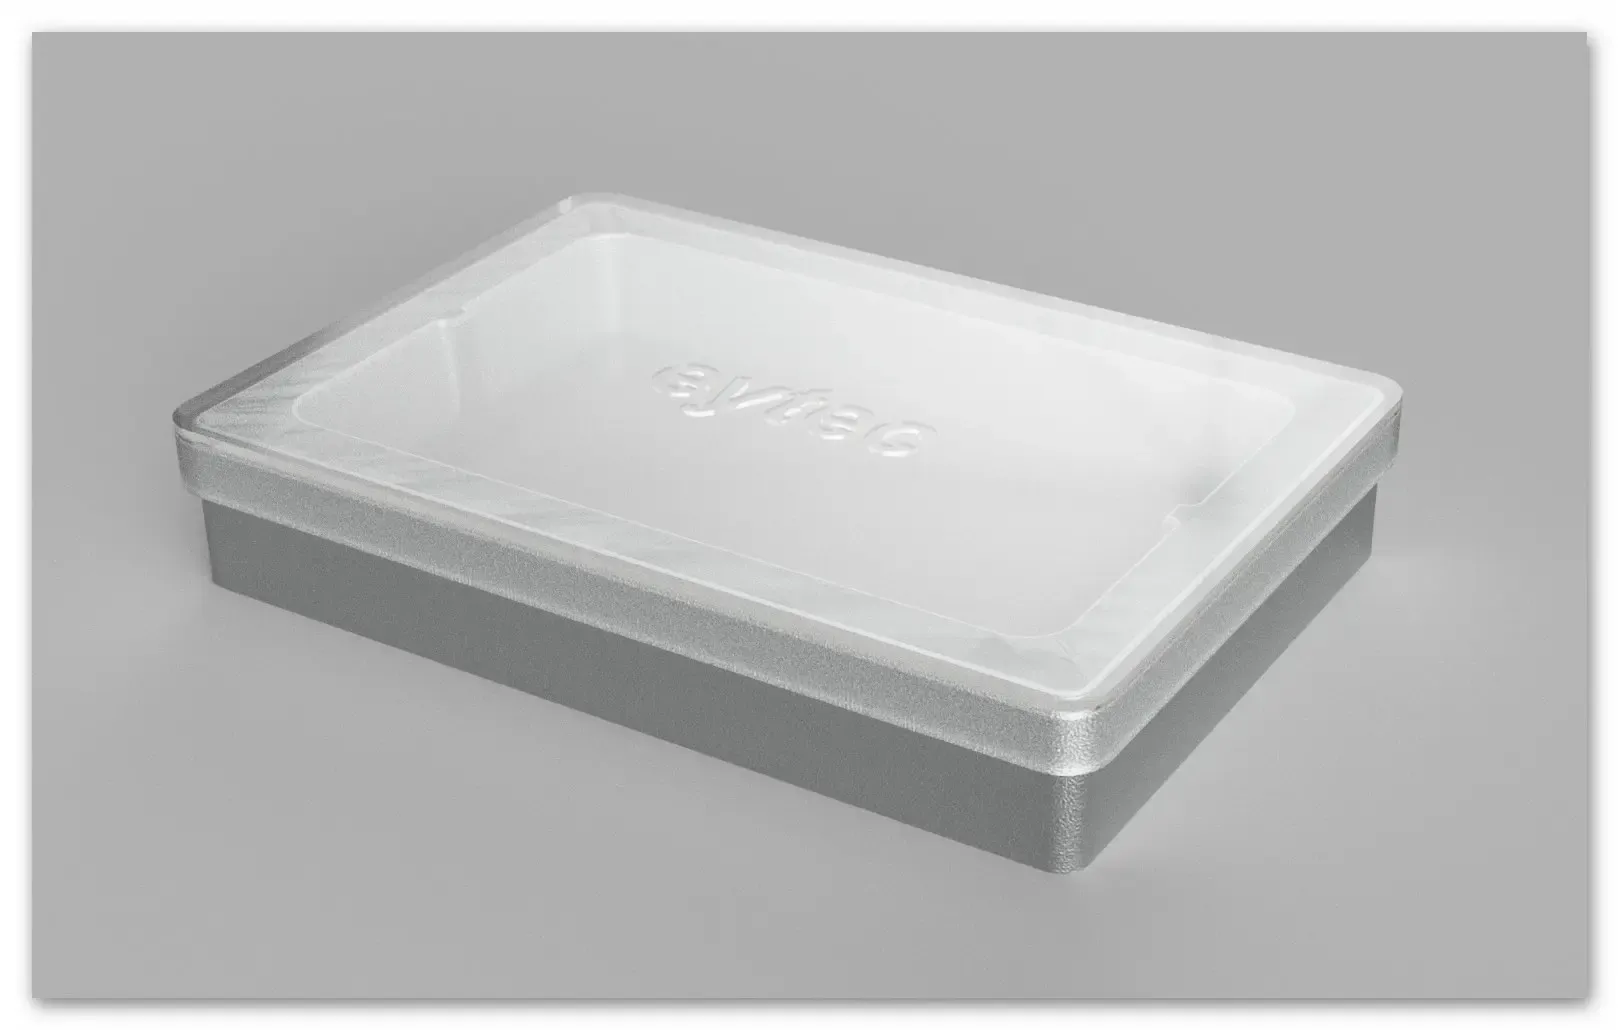 Silicon Vat cover/protector for Elegoo Mars resin tank